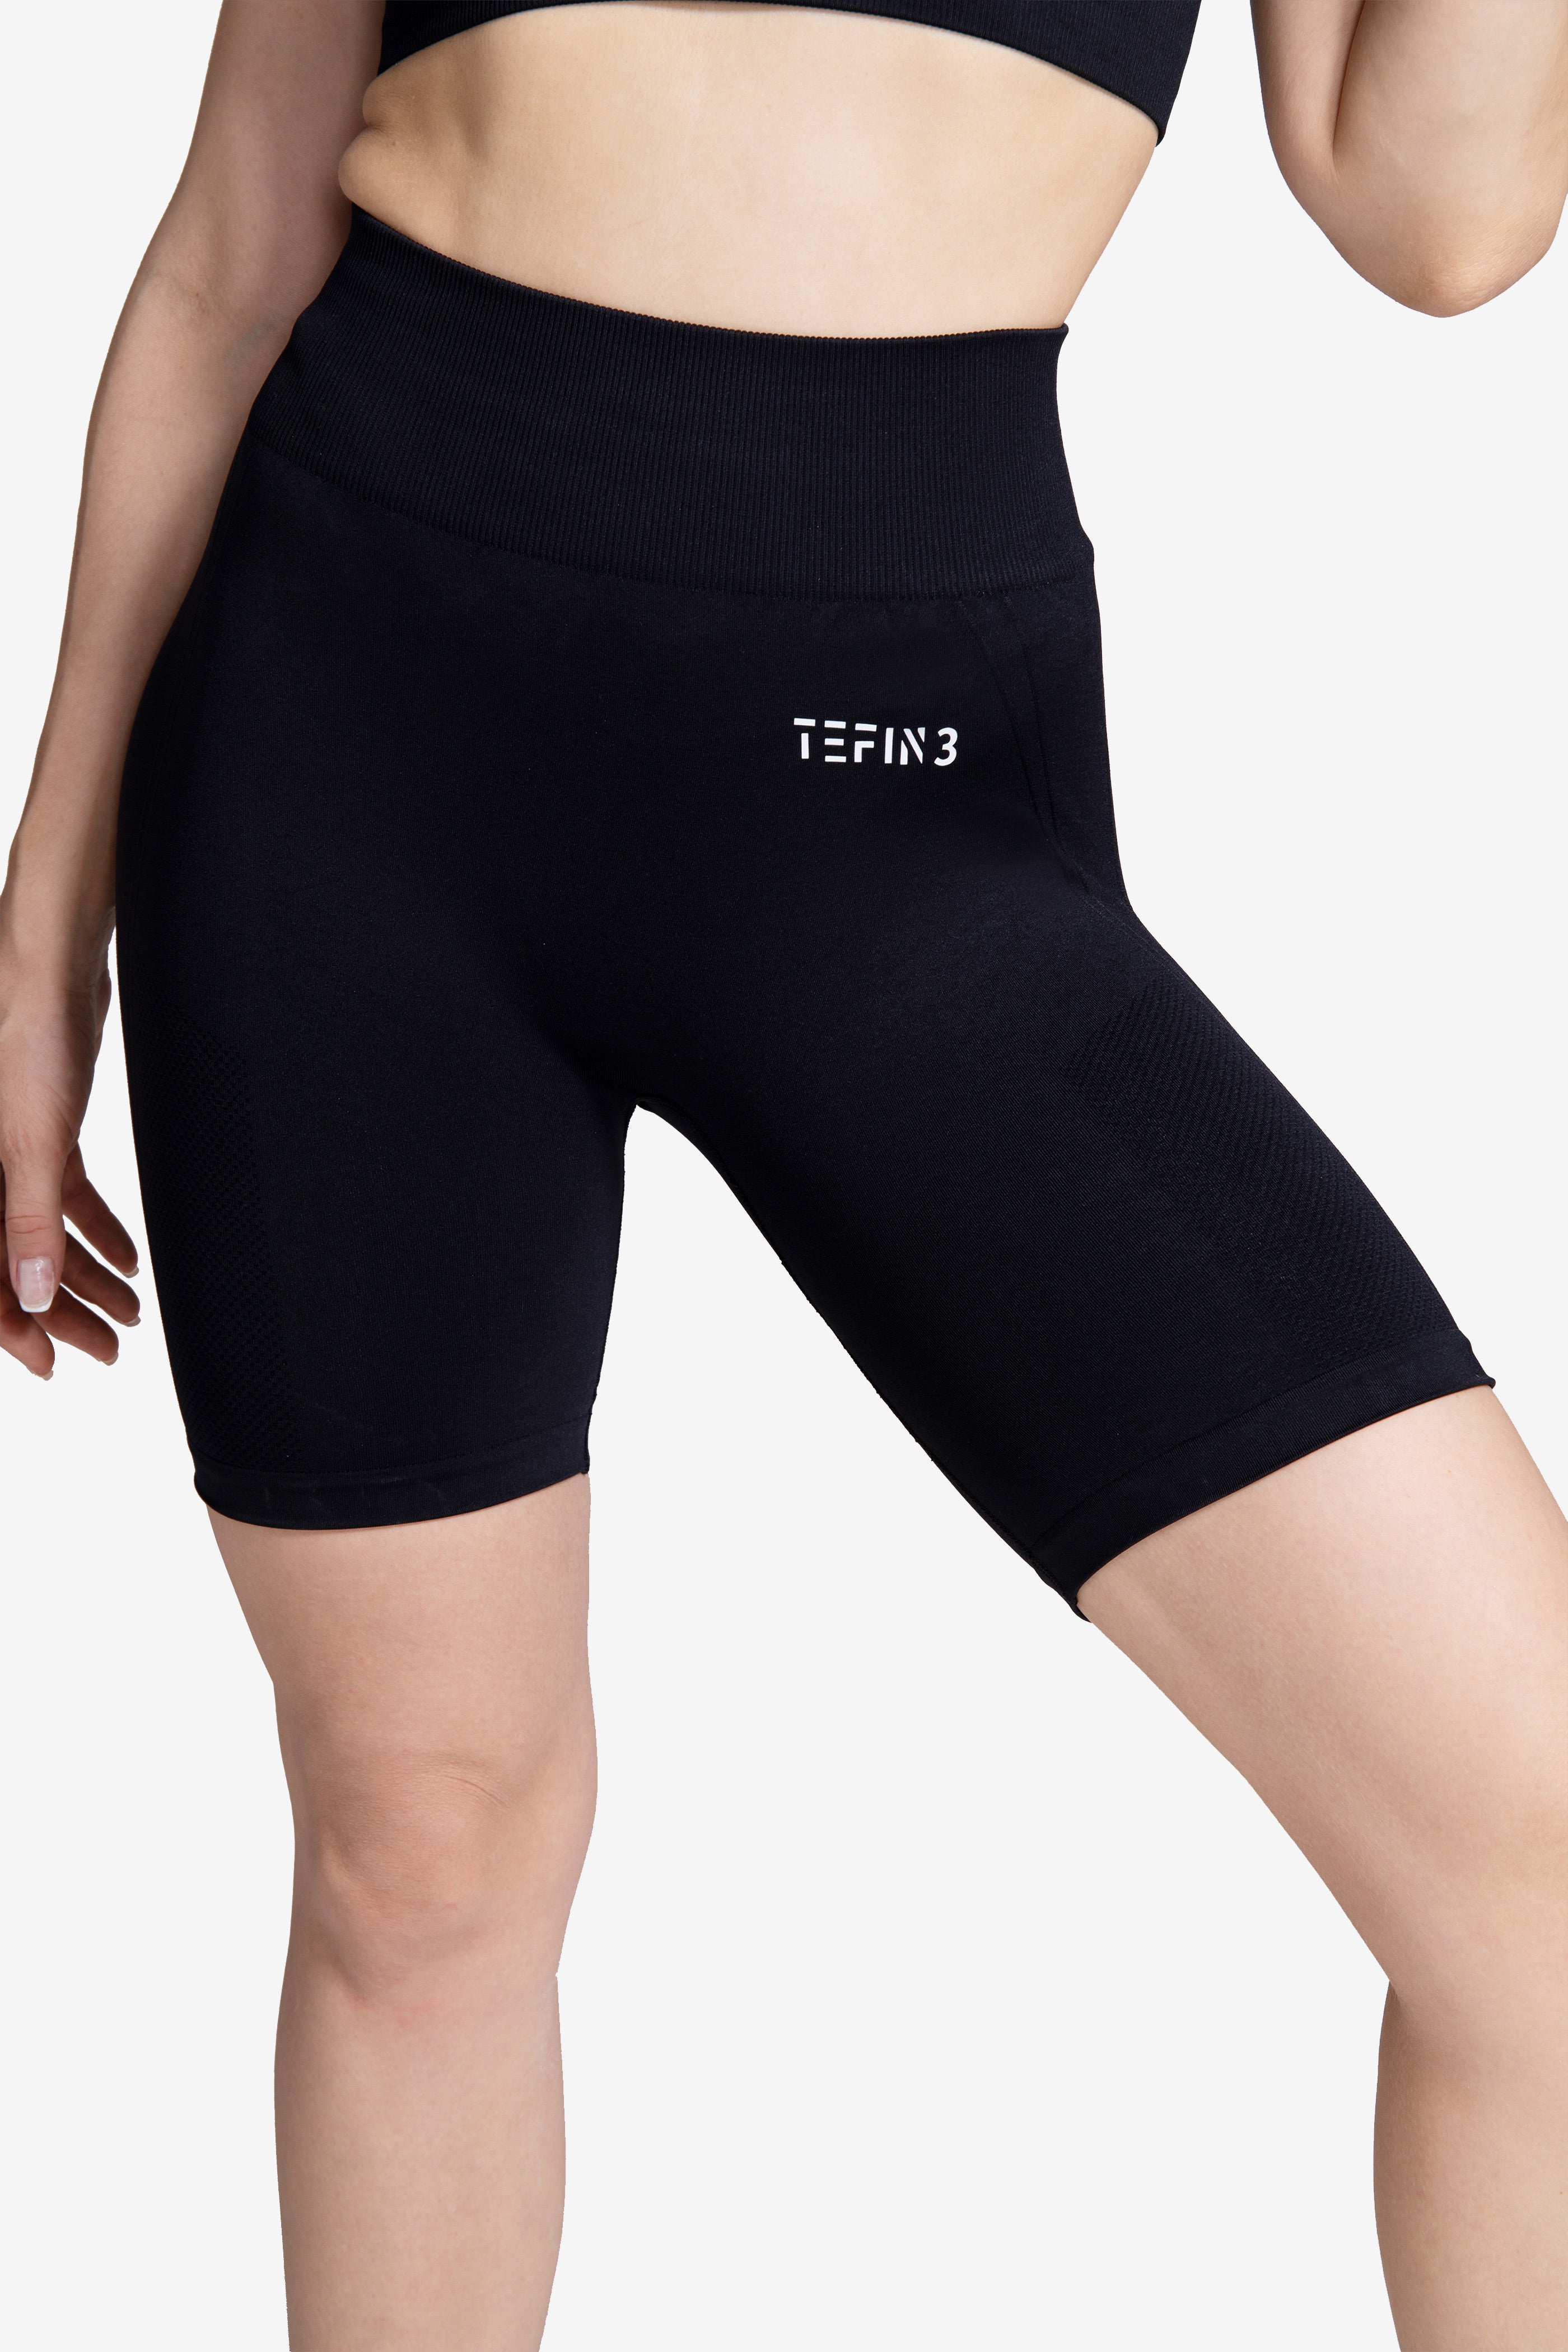 Black TEFIN3 Seamless Workout Comfy Shorts Women